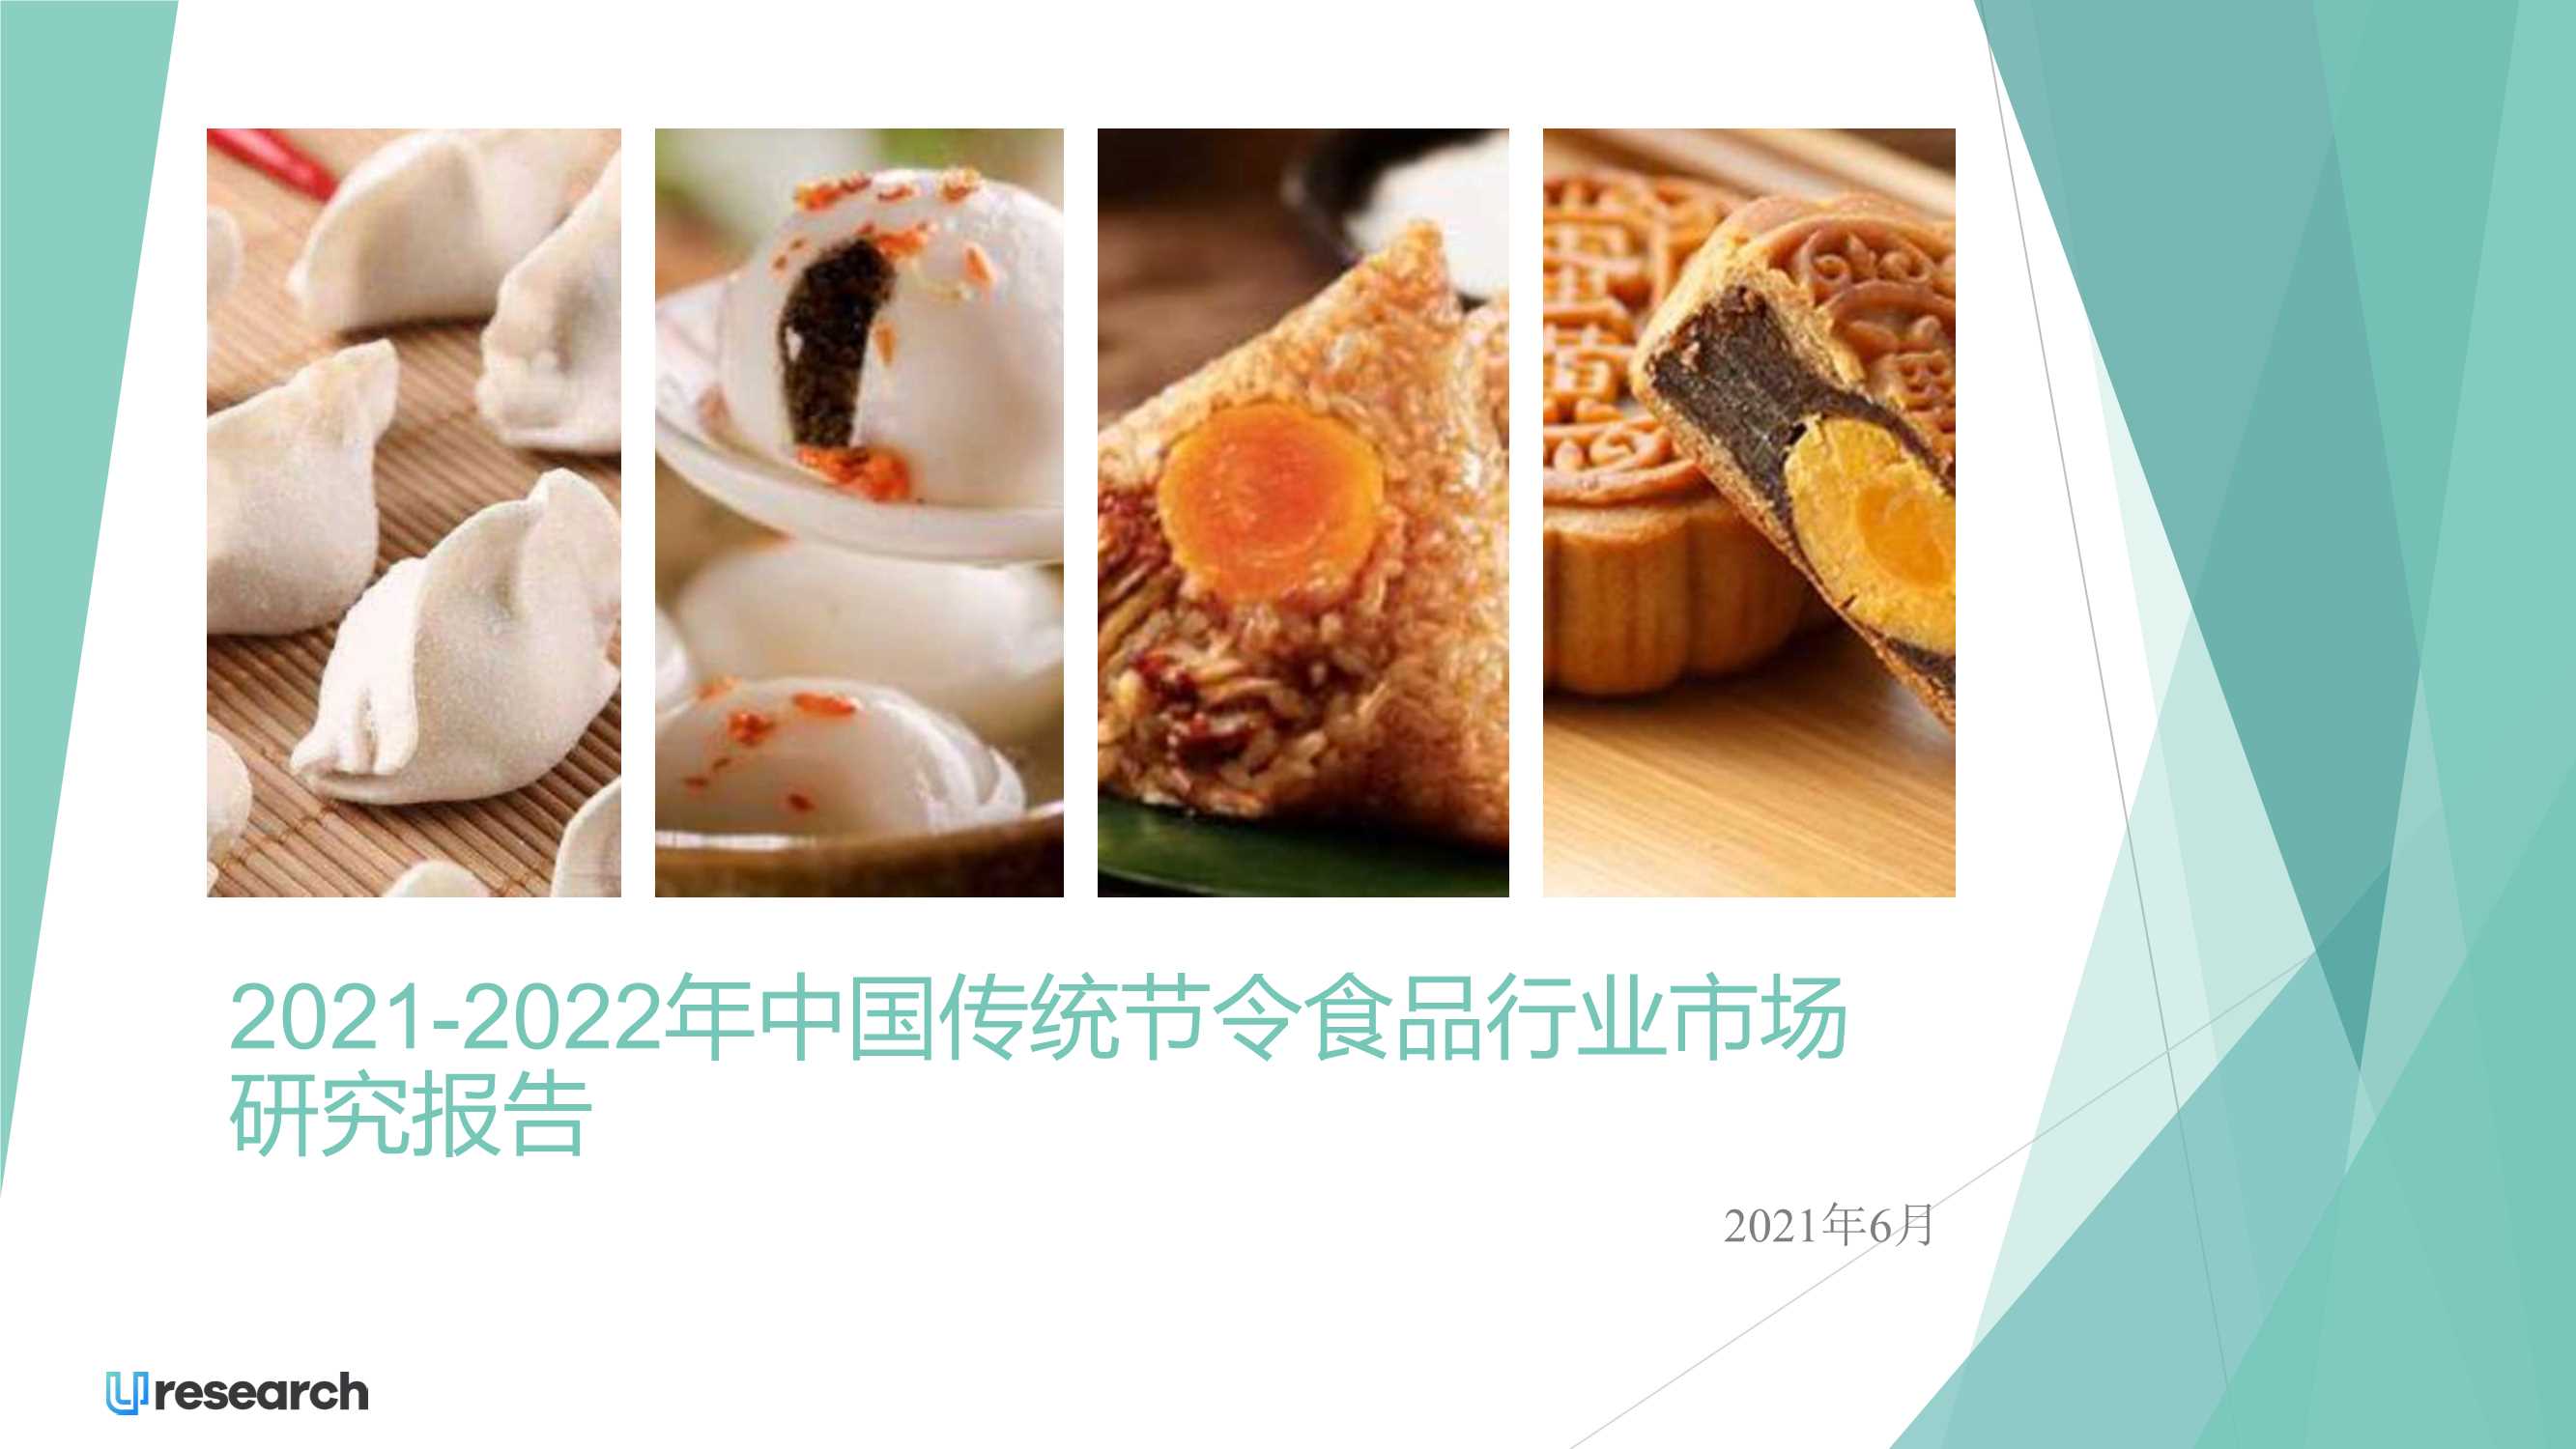 Uresearch-2021-2022年中国传统节令食品行业市场研究报告-2022.02-21页